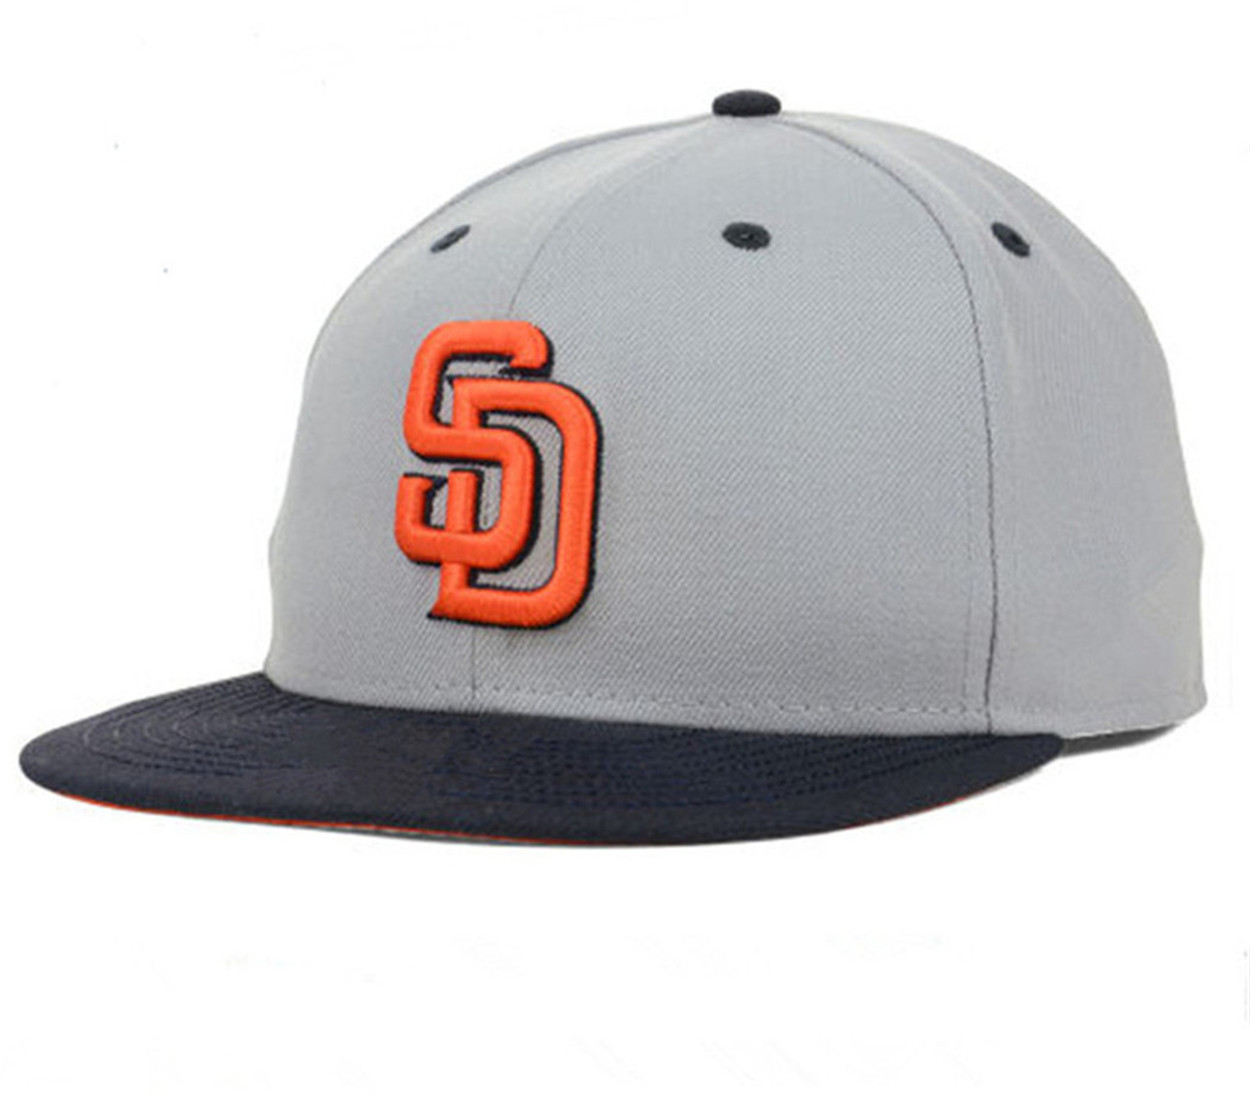 New San Diego Baseballteam Snapback Full Closed Caps Sommer als SD-Brief Gorras Bones Männer Frauen lässig Outdoor Sport flacher Hats Chapeau Cap A-8